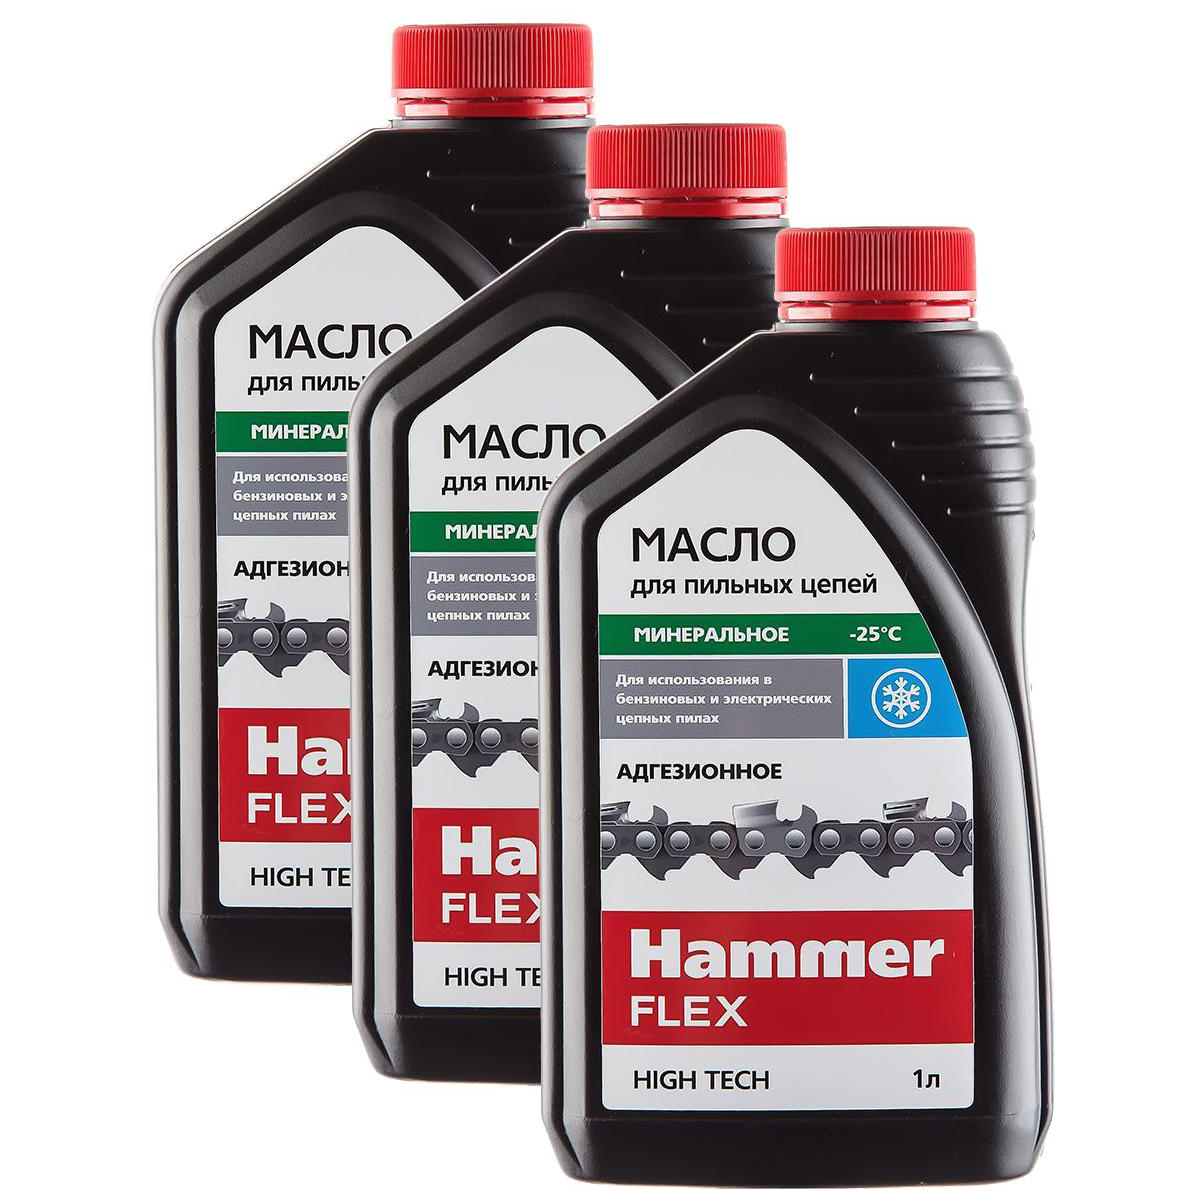 Масло флекс. Hammer масло для цепи. Масло для пильных цепей Hammer 501-006, адгезионное 1л. Масло Хаммер для пильных цепей. Компрессорное масло Hammer.